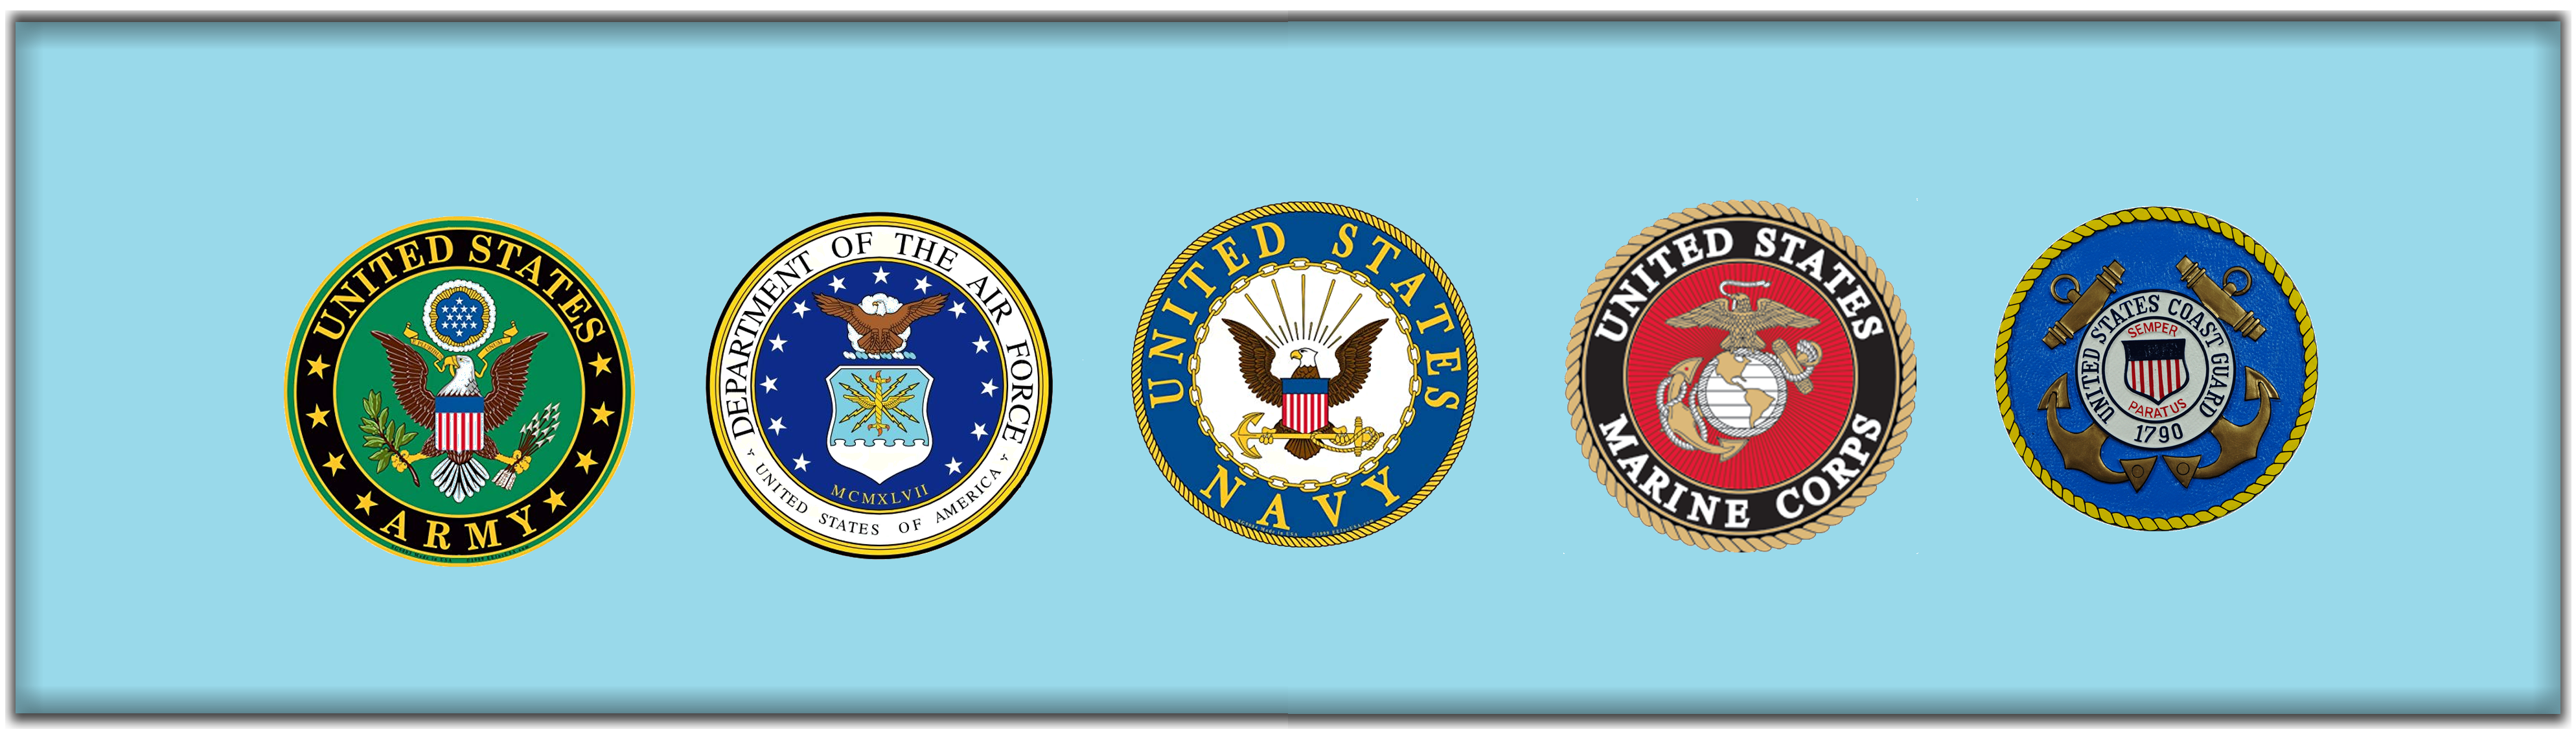 US Military Logos 